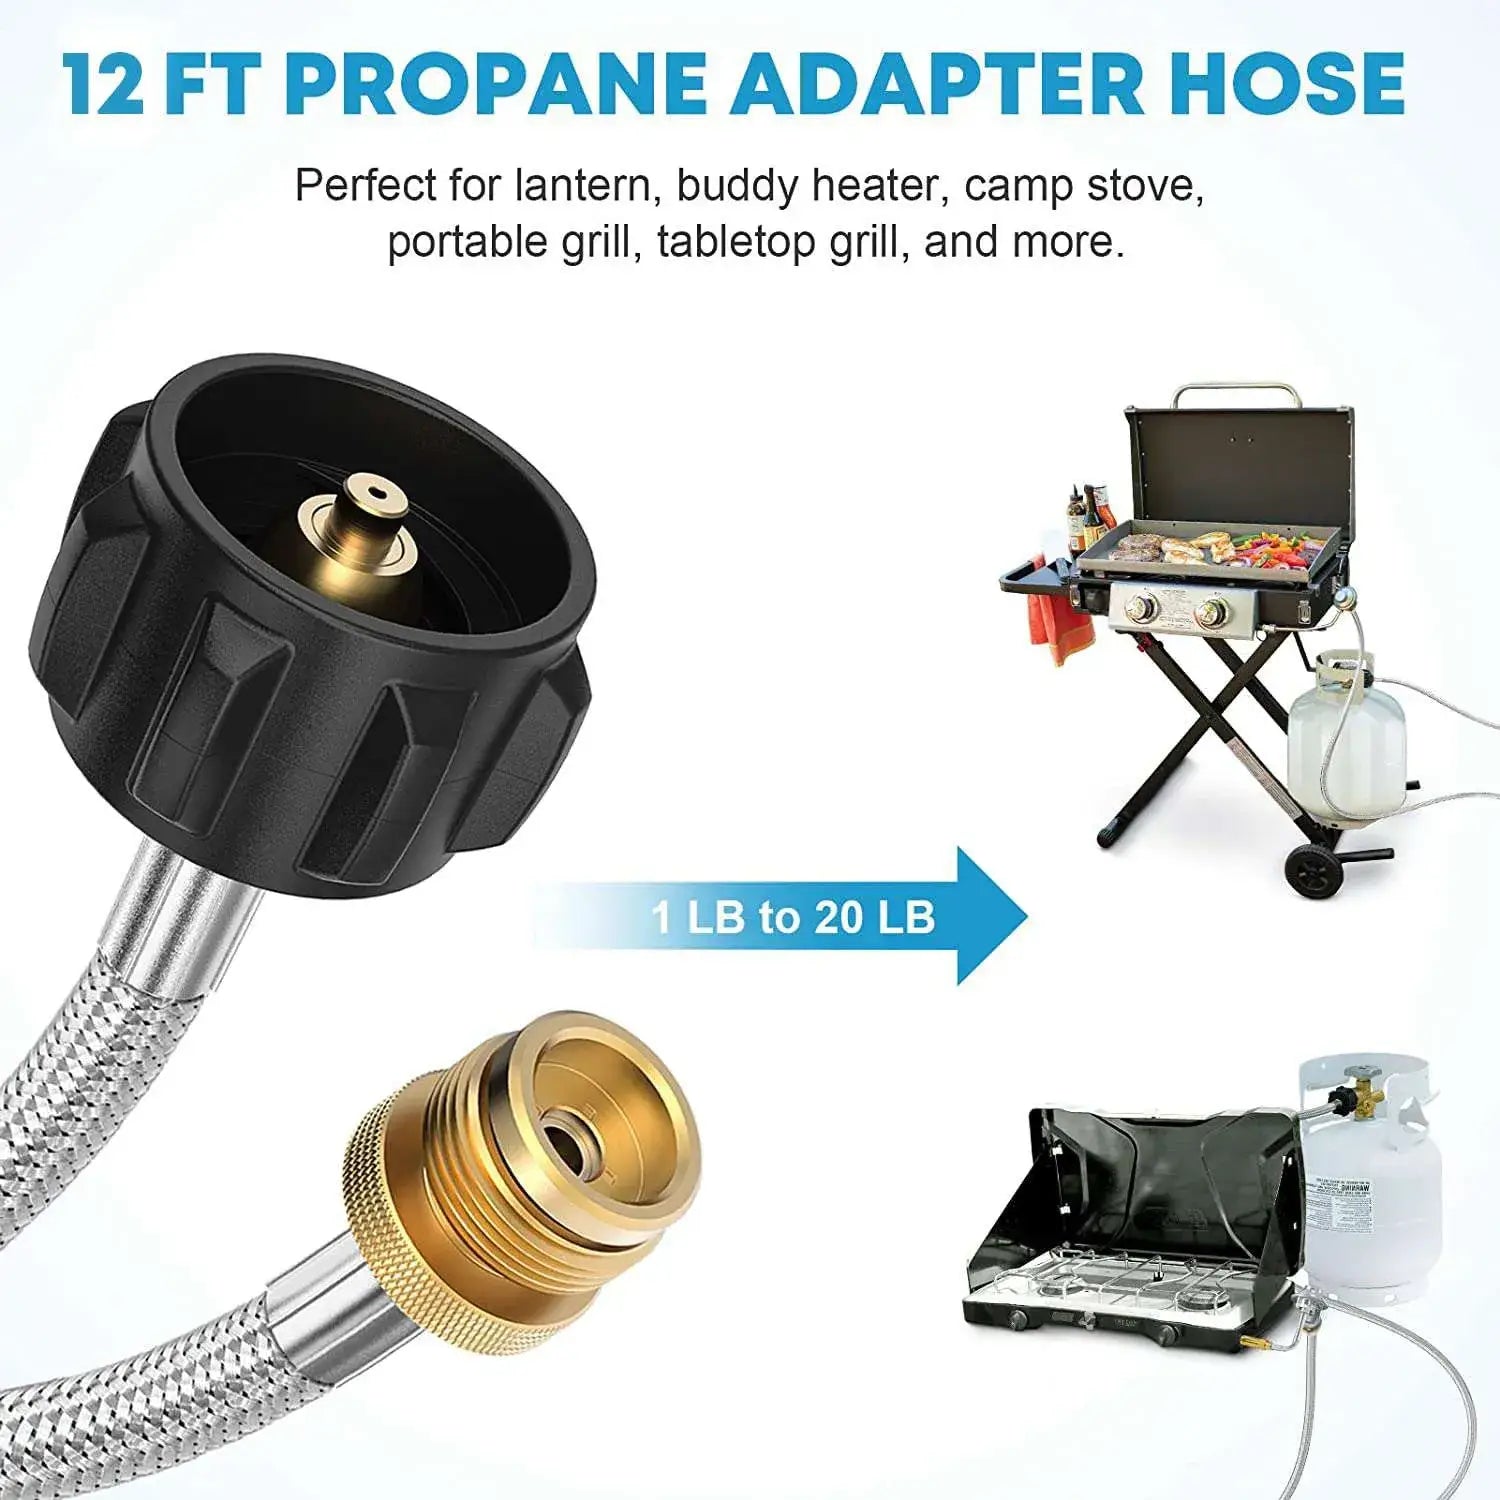 12 ft propane adapter hose